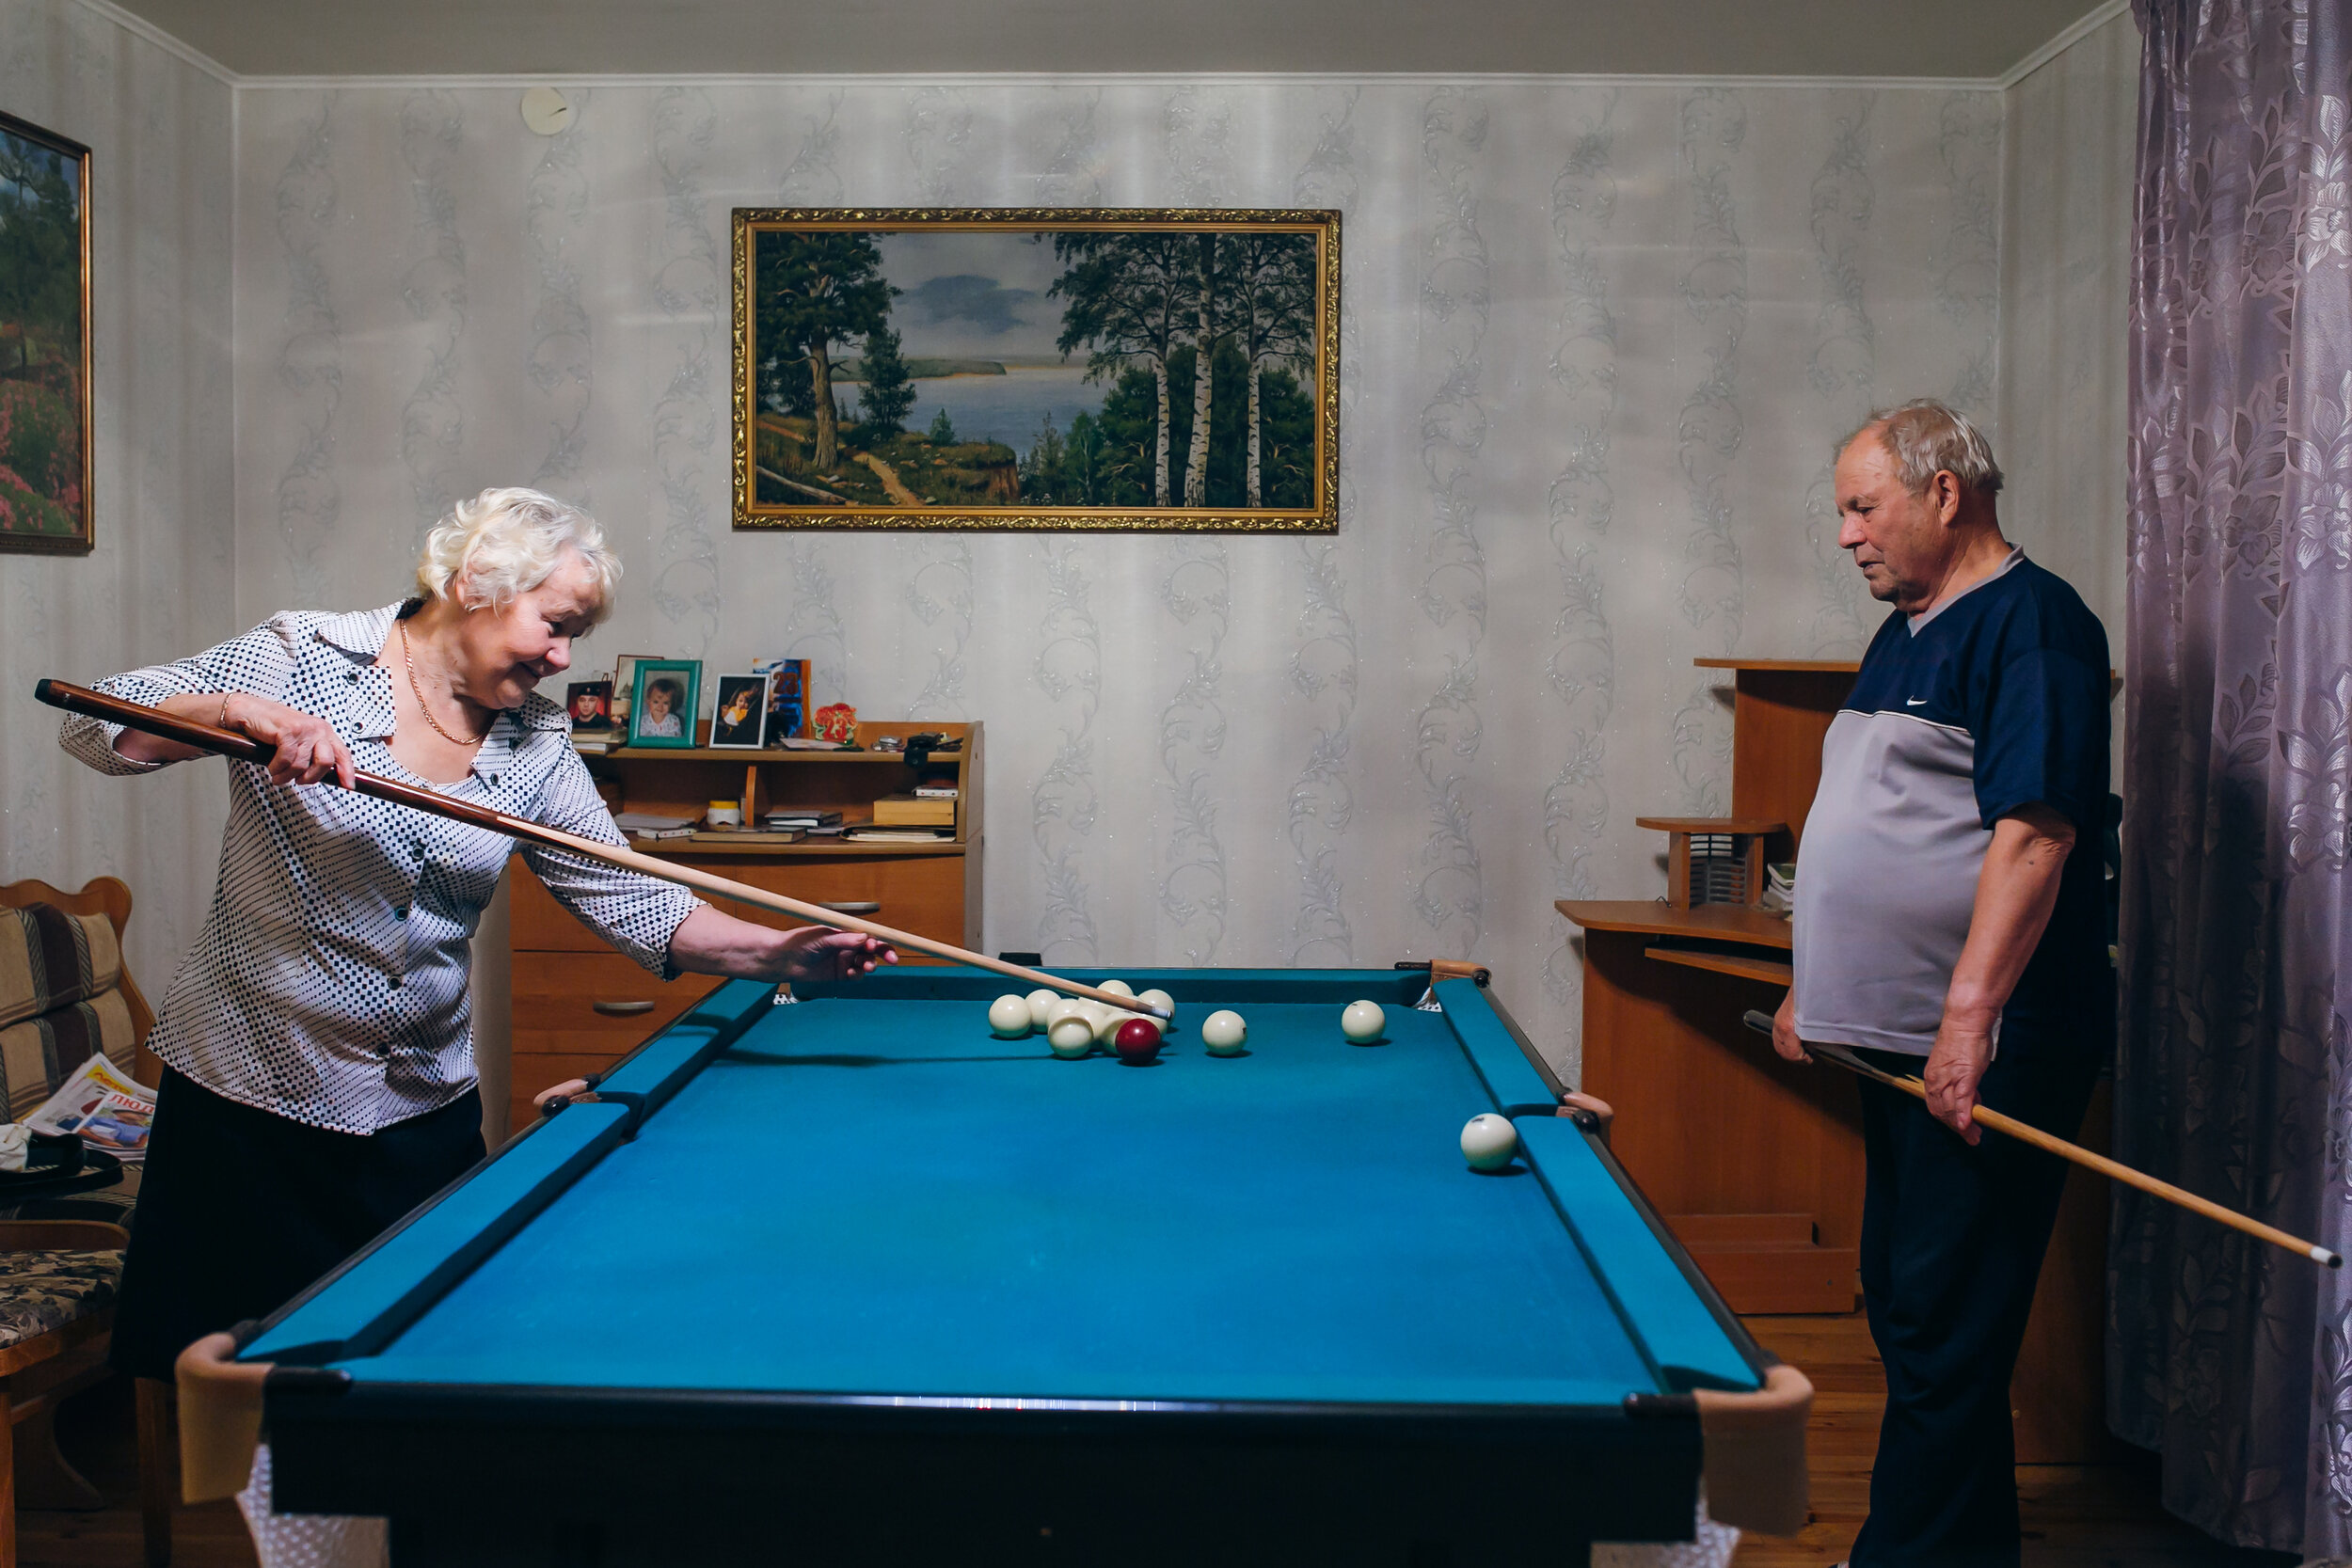  Antonina and Nikolay are playing pool at Nikolay’s home. He teaches Antonina the way to hold the cue.     